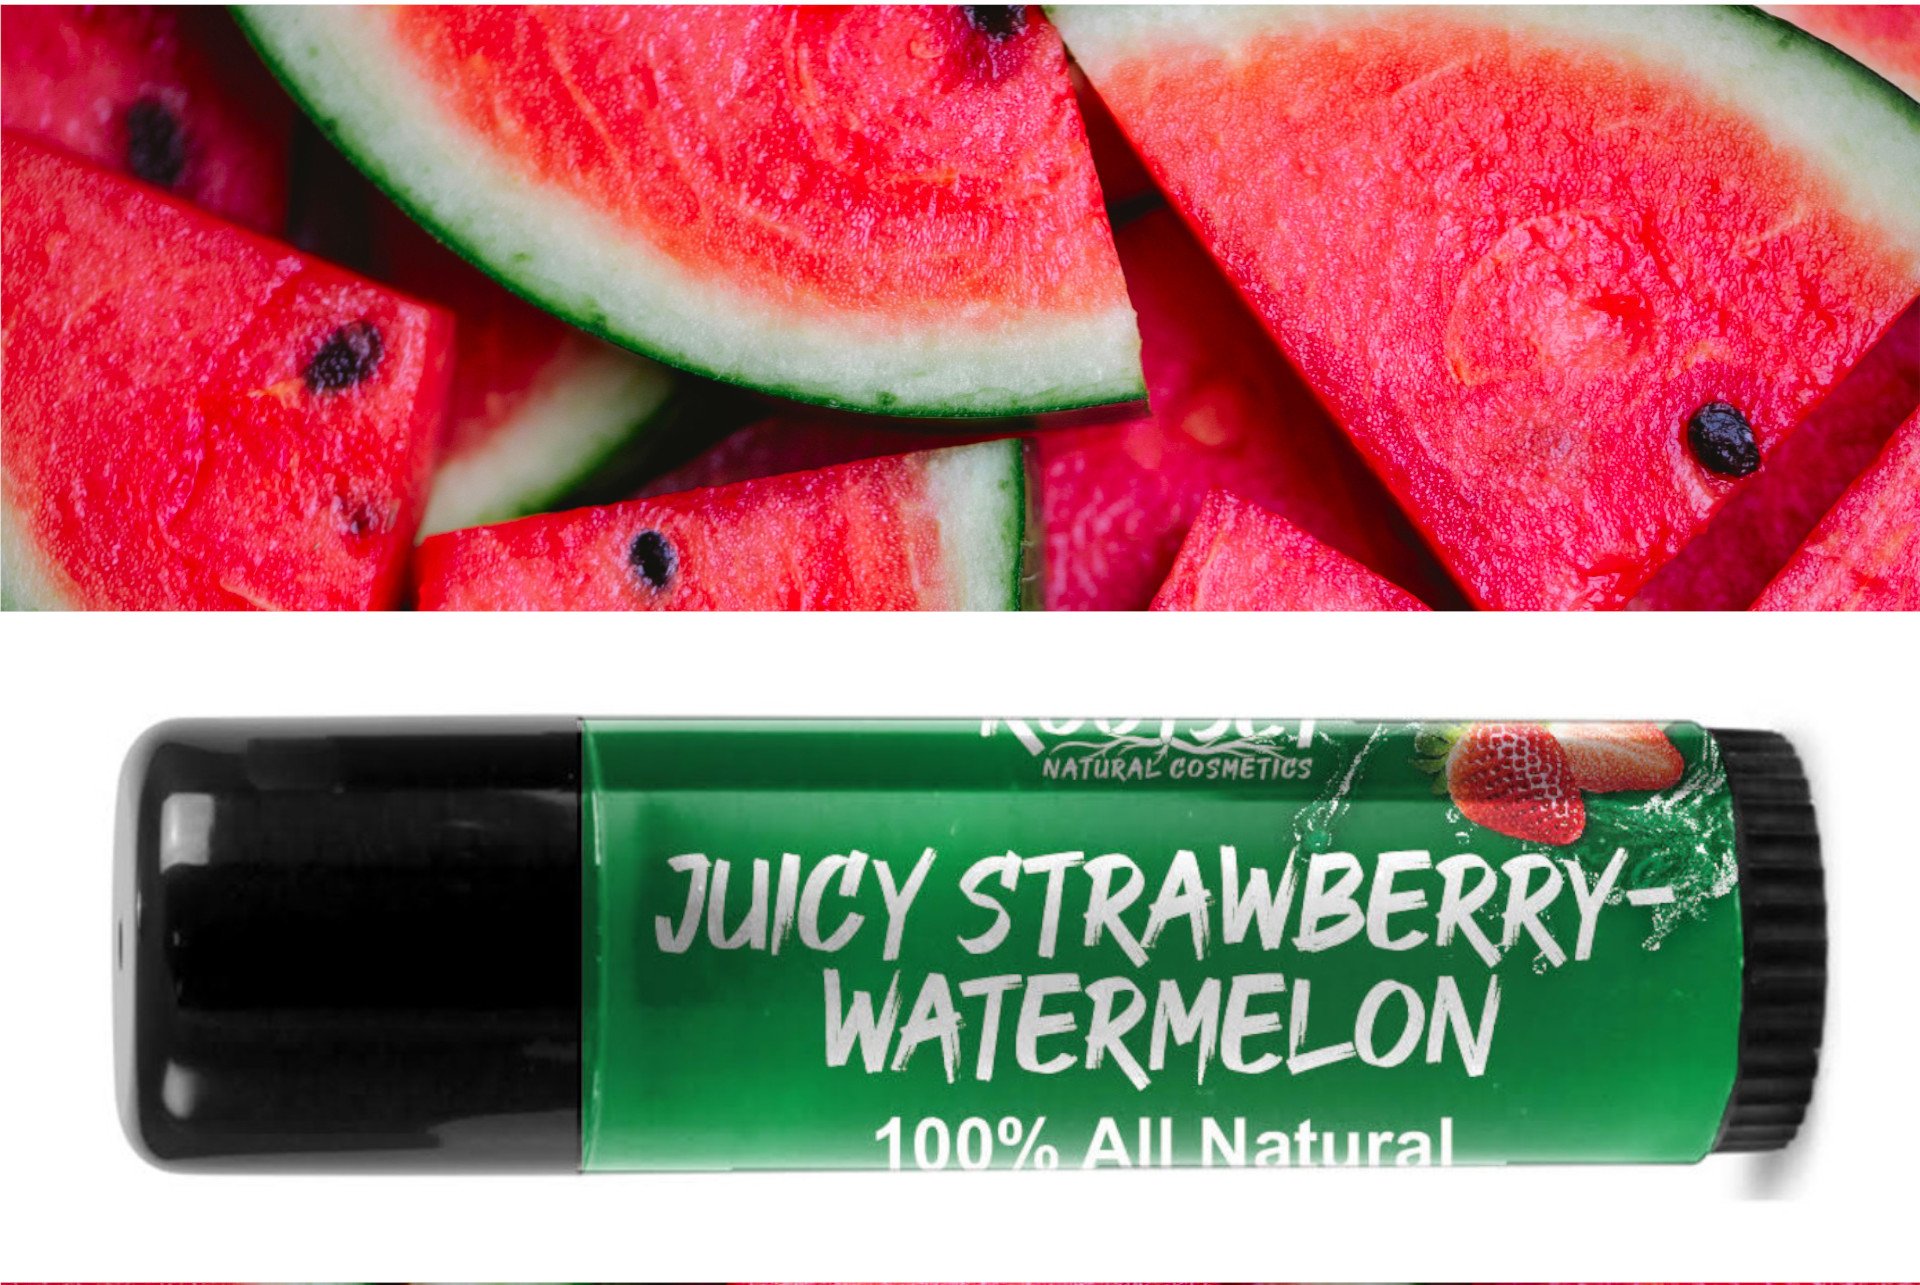 Juicy Strawberry-Watermelon Jumbo 100% All Natural Lip & Body Balm.jpg